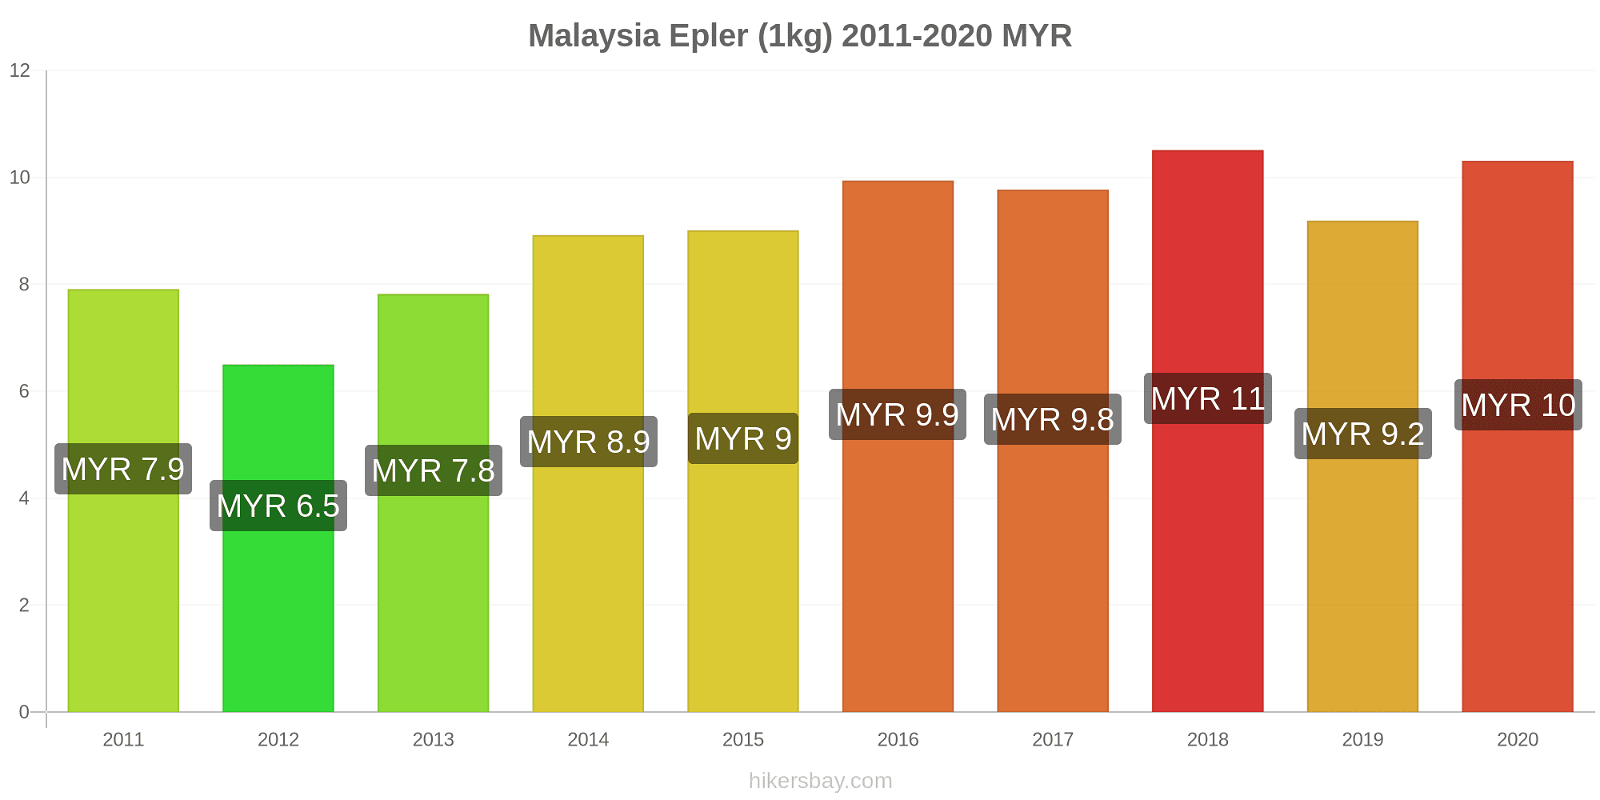 Malaysia prisendringer Epler (1kg) hikersbay.com